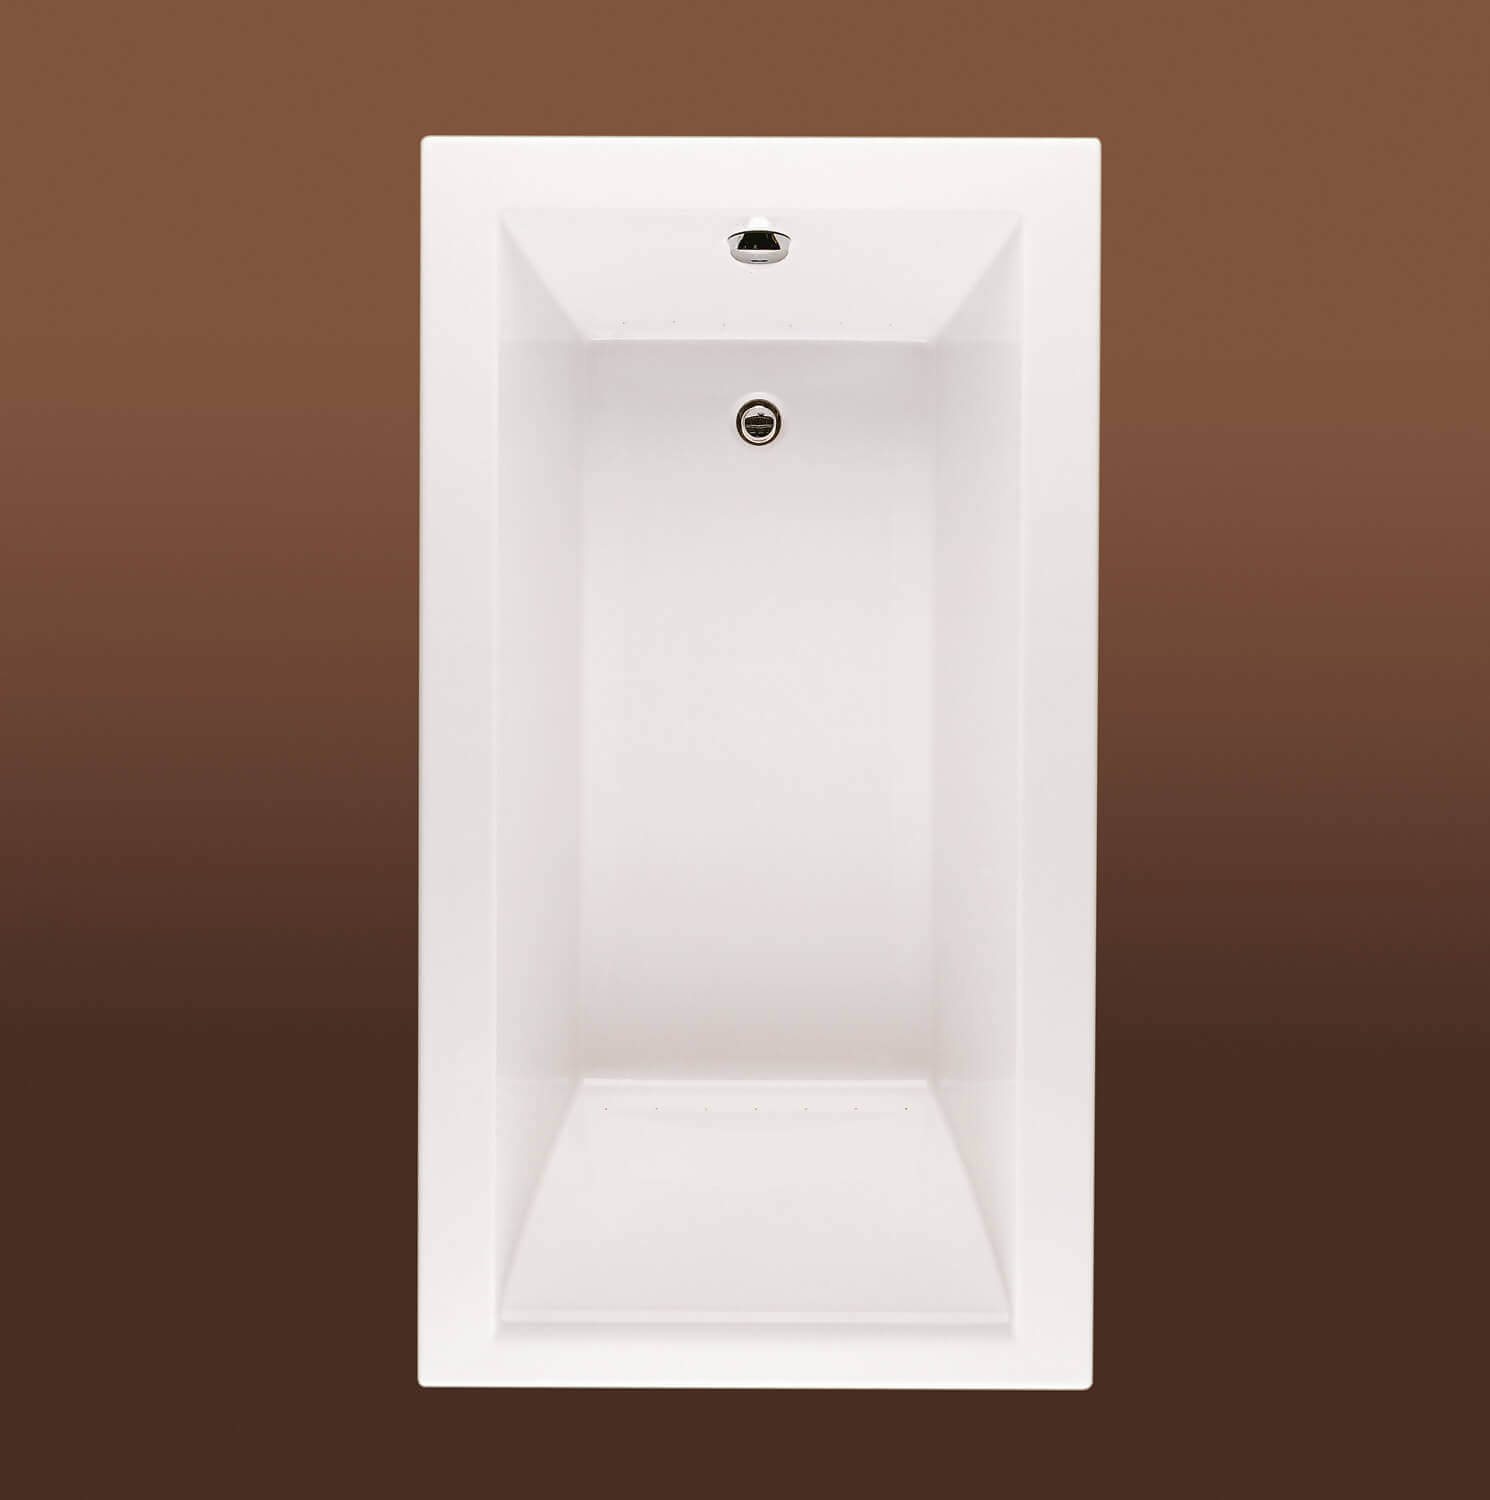 Bainultra Origami® 6030 alcove drop-in air jet bathtub for your modern bathroom